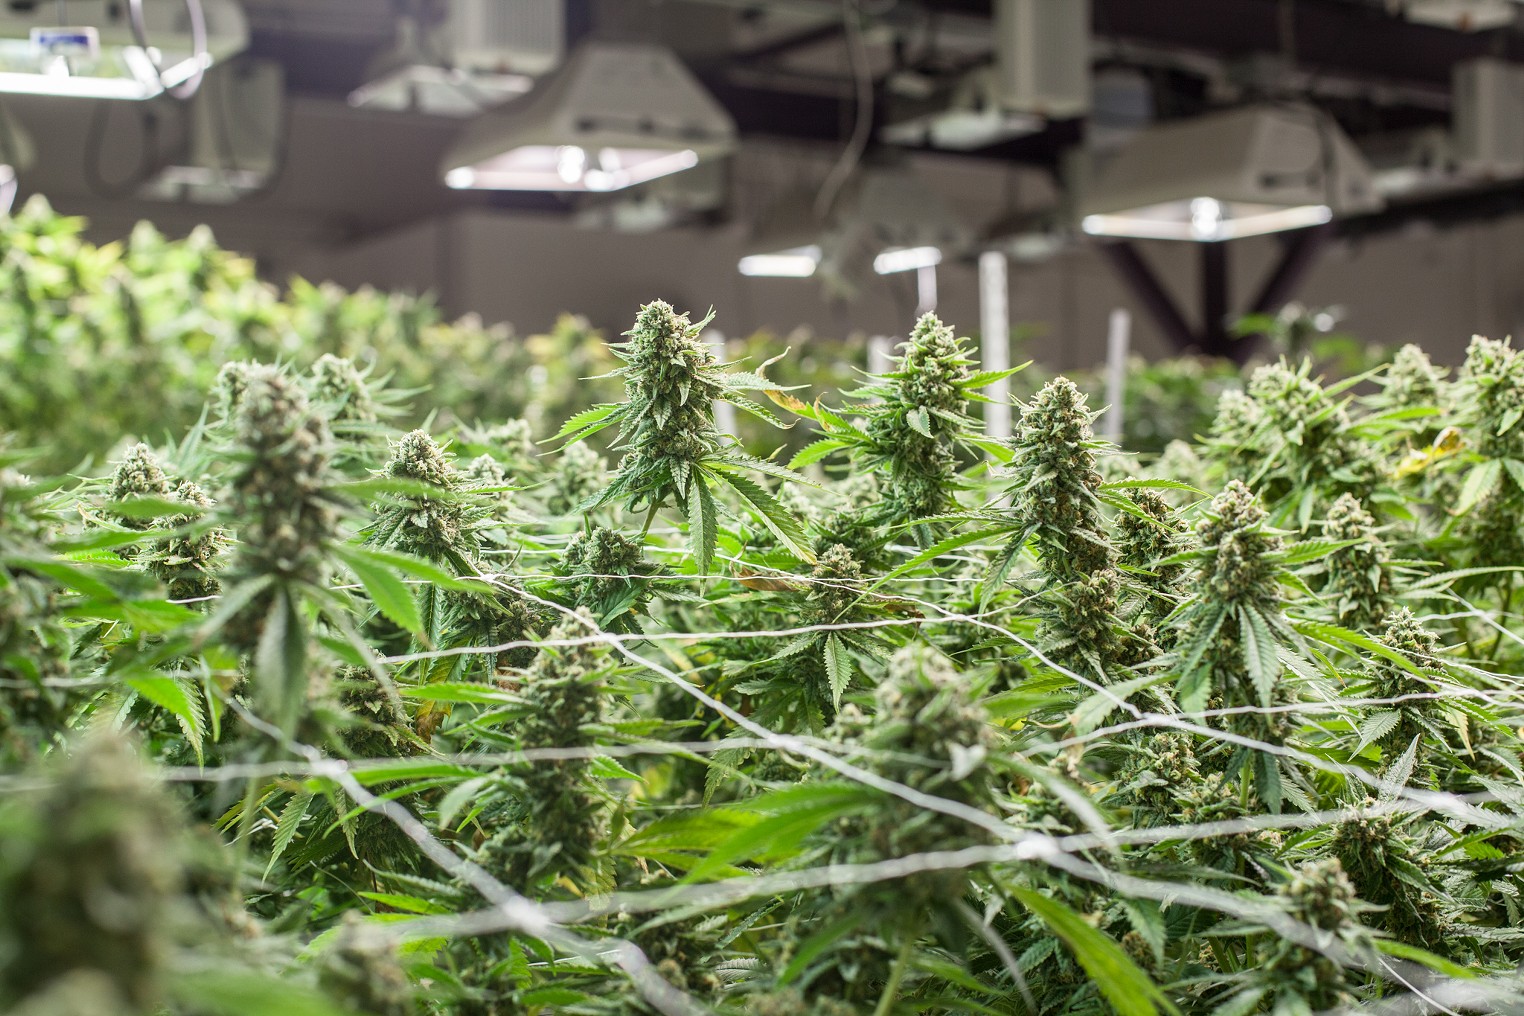 Colorado Marijuana Growers Want a License Moratorium as Prices Fall